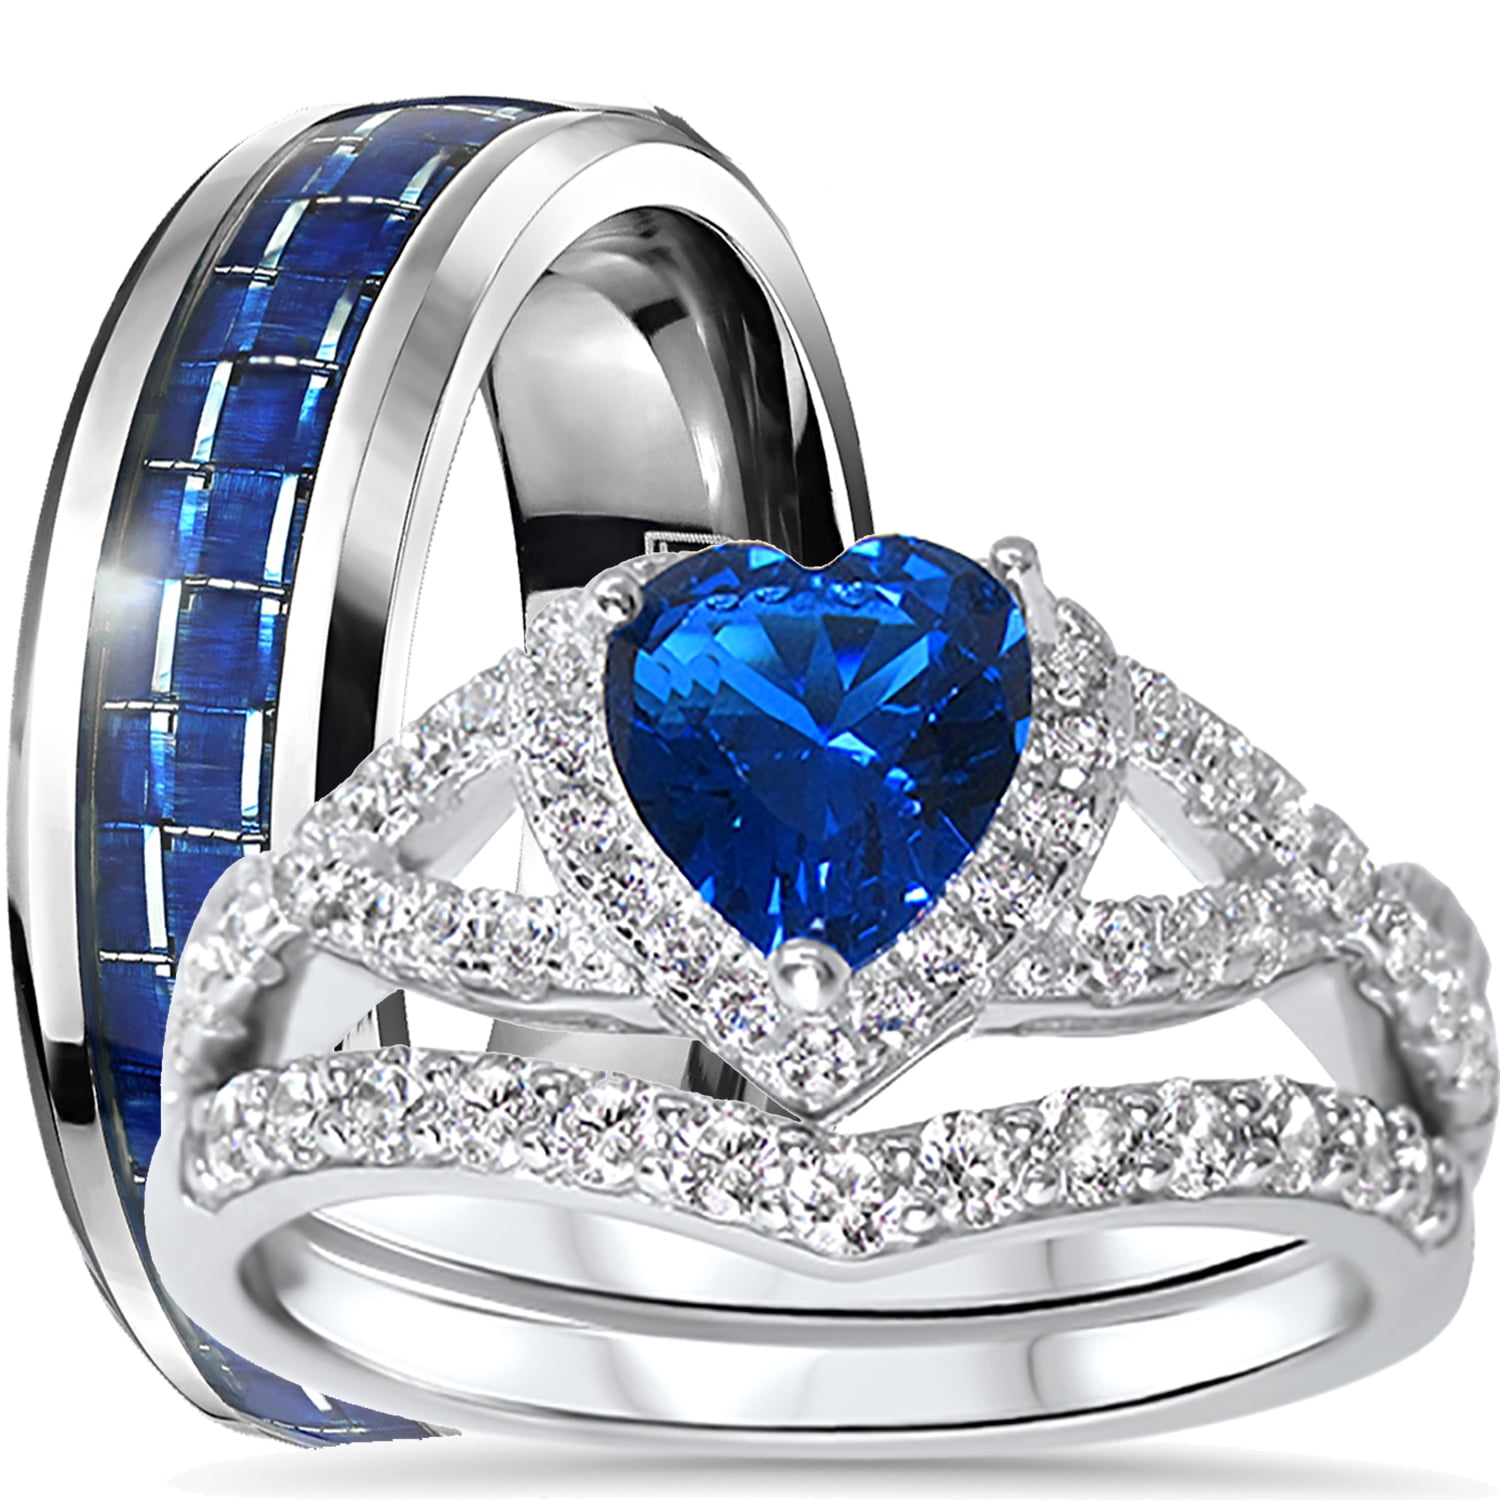 Fashion Square Shape 2.95ct White Sapphire 925 Silver Wedding Ring Size 6-10 